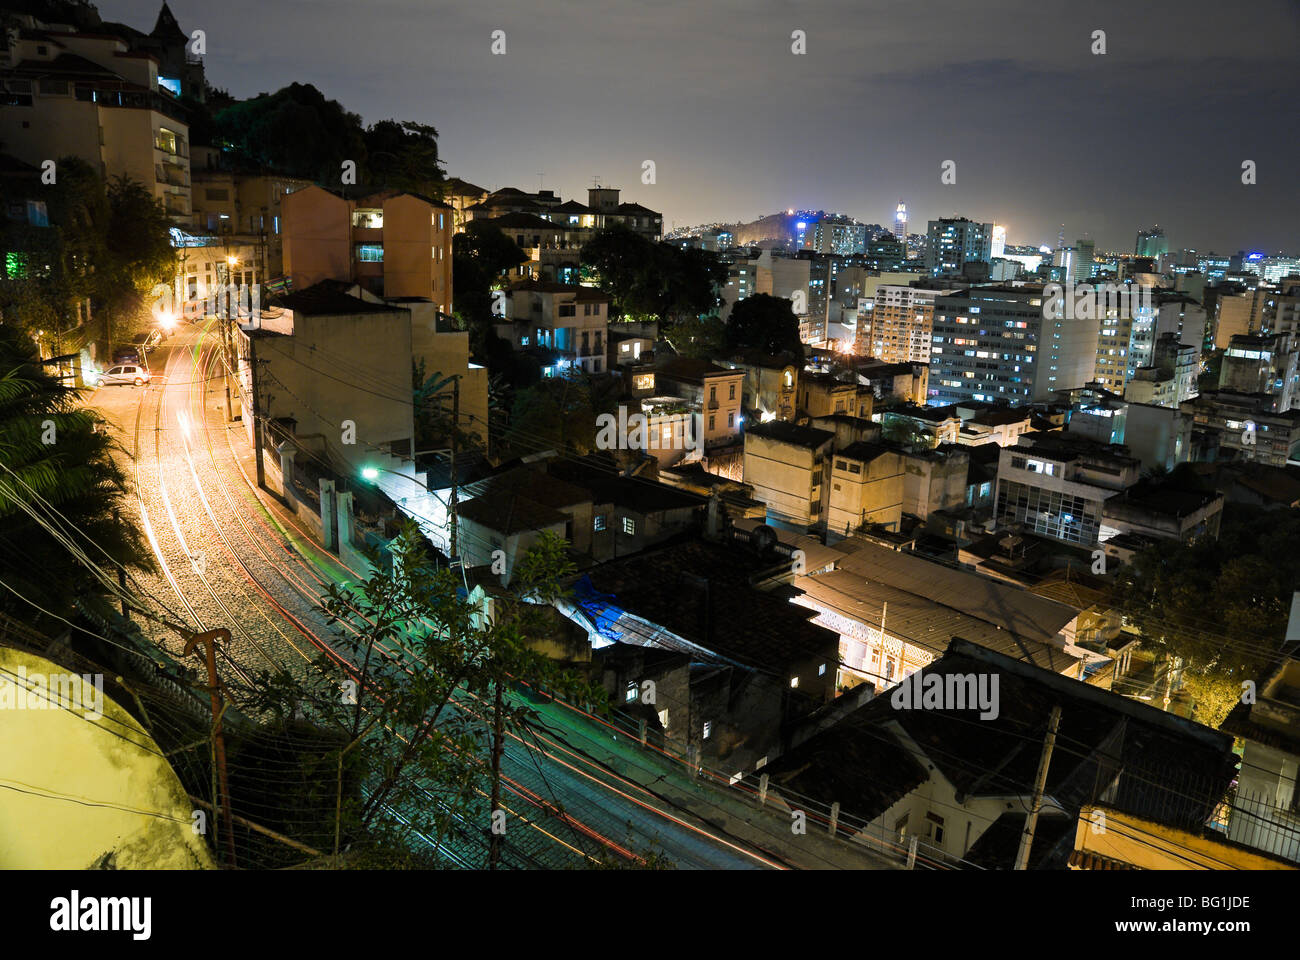 Night view of Santa Teresa neighborhood, Rio de Janeiro, Brazil. Stock Photo